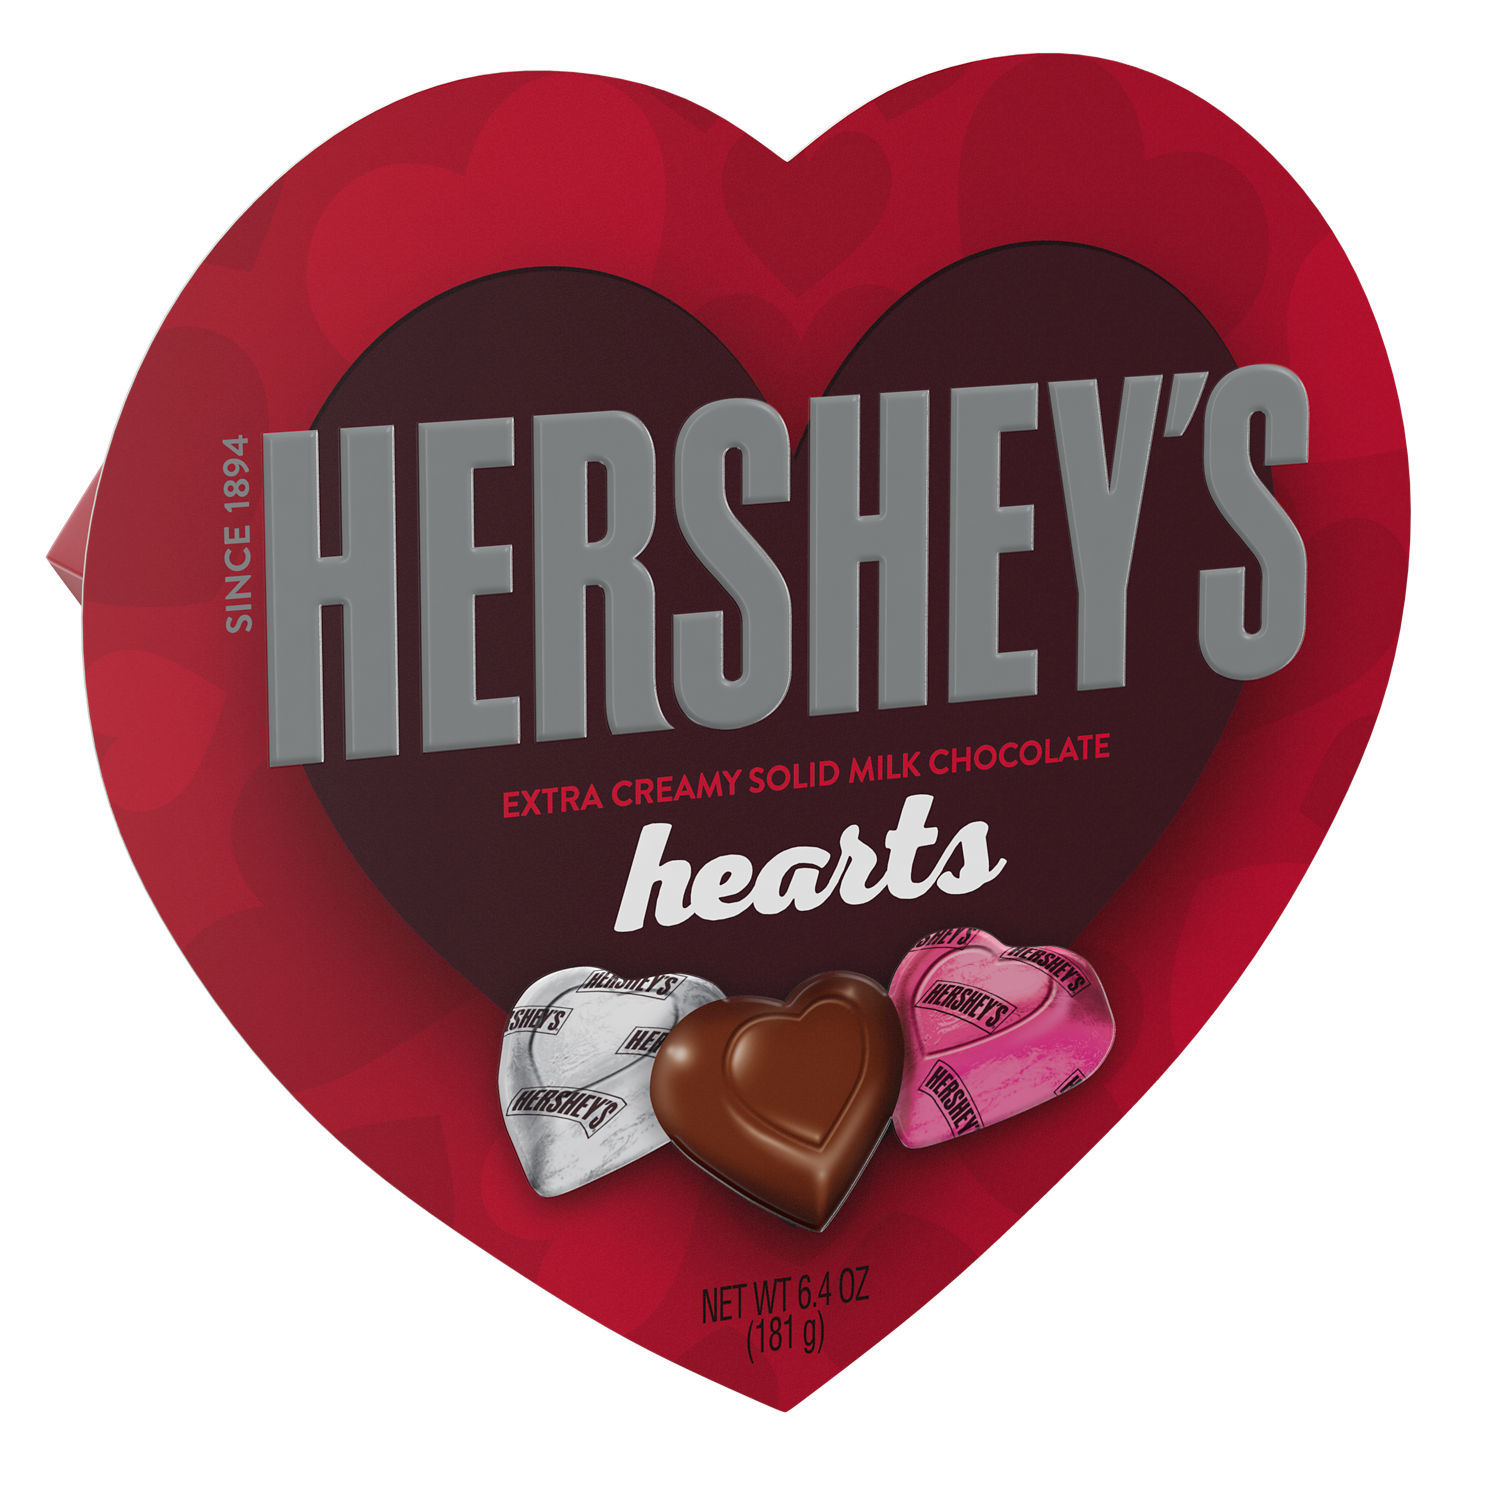 Hershey's Milk Chocolate Hearts Valentine's Day Candy, Gift Box 6.4 oz - image 1 of 6